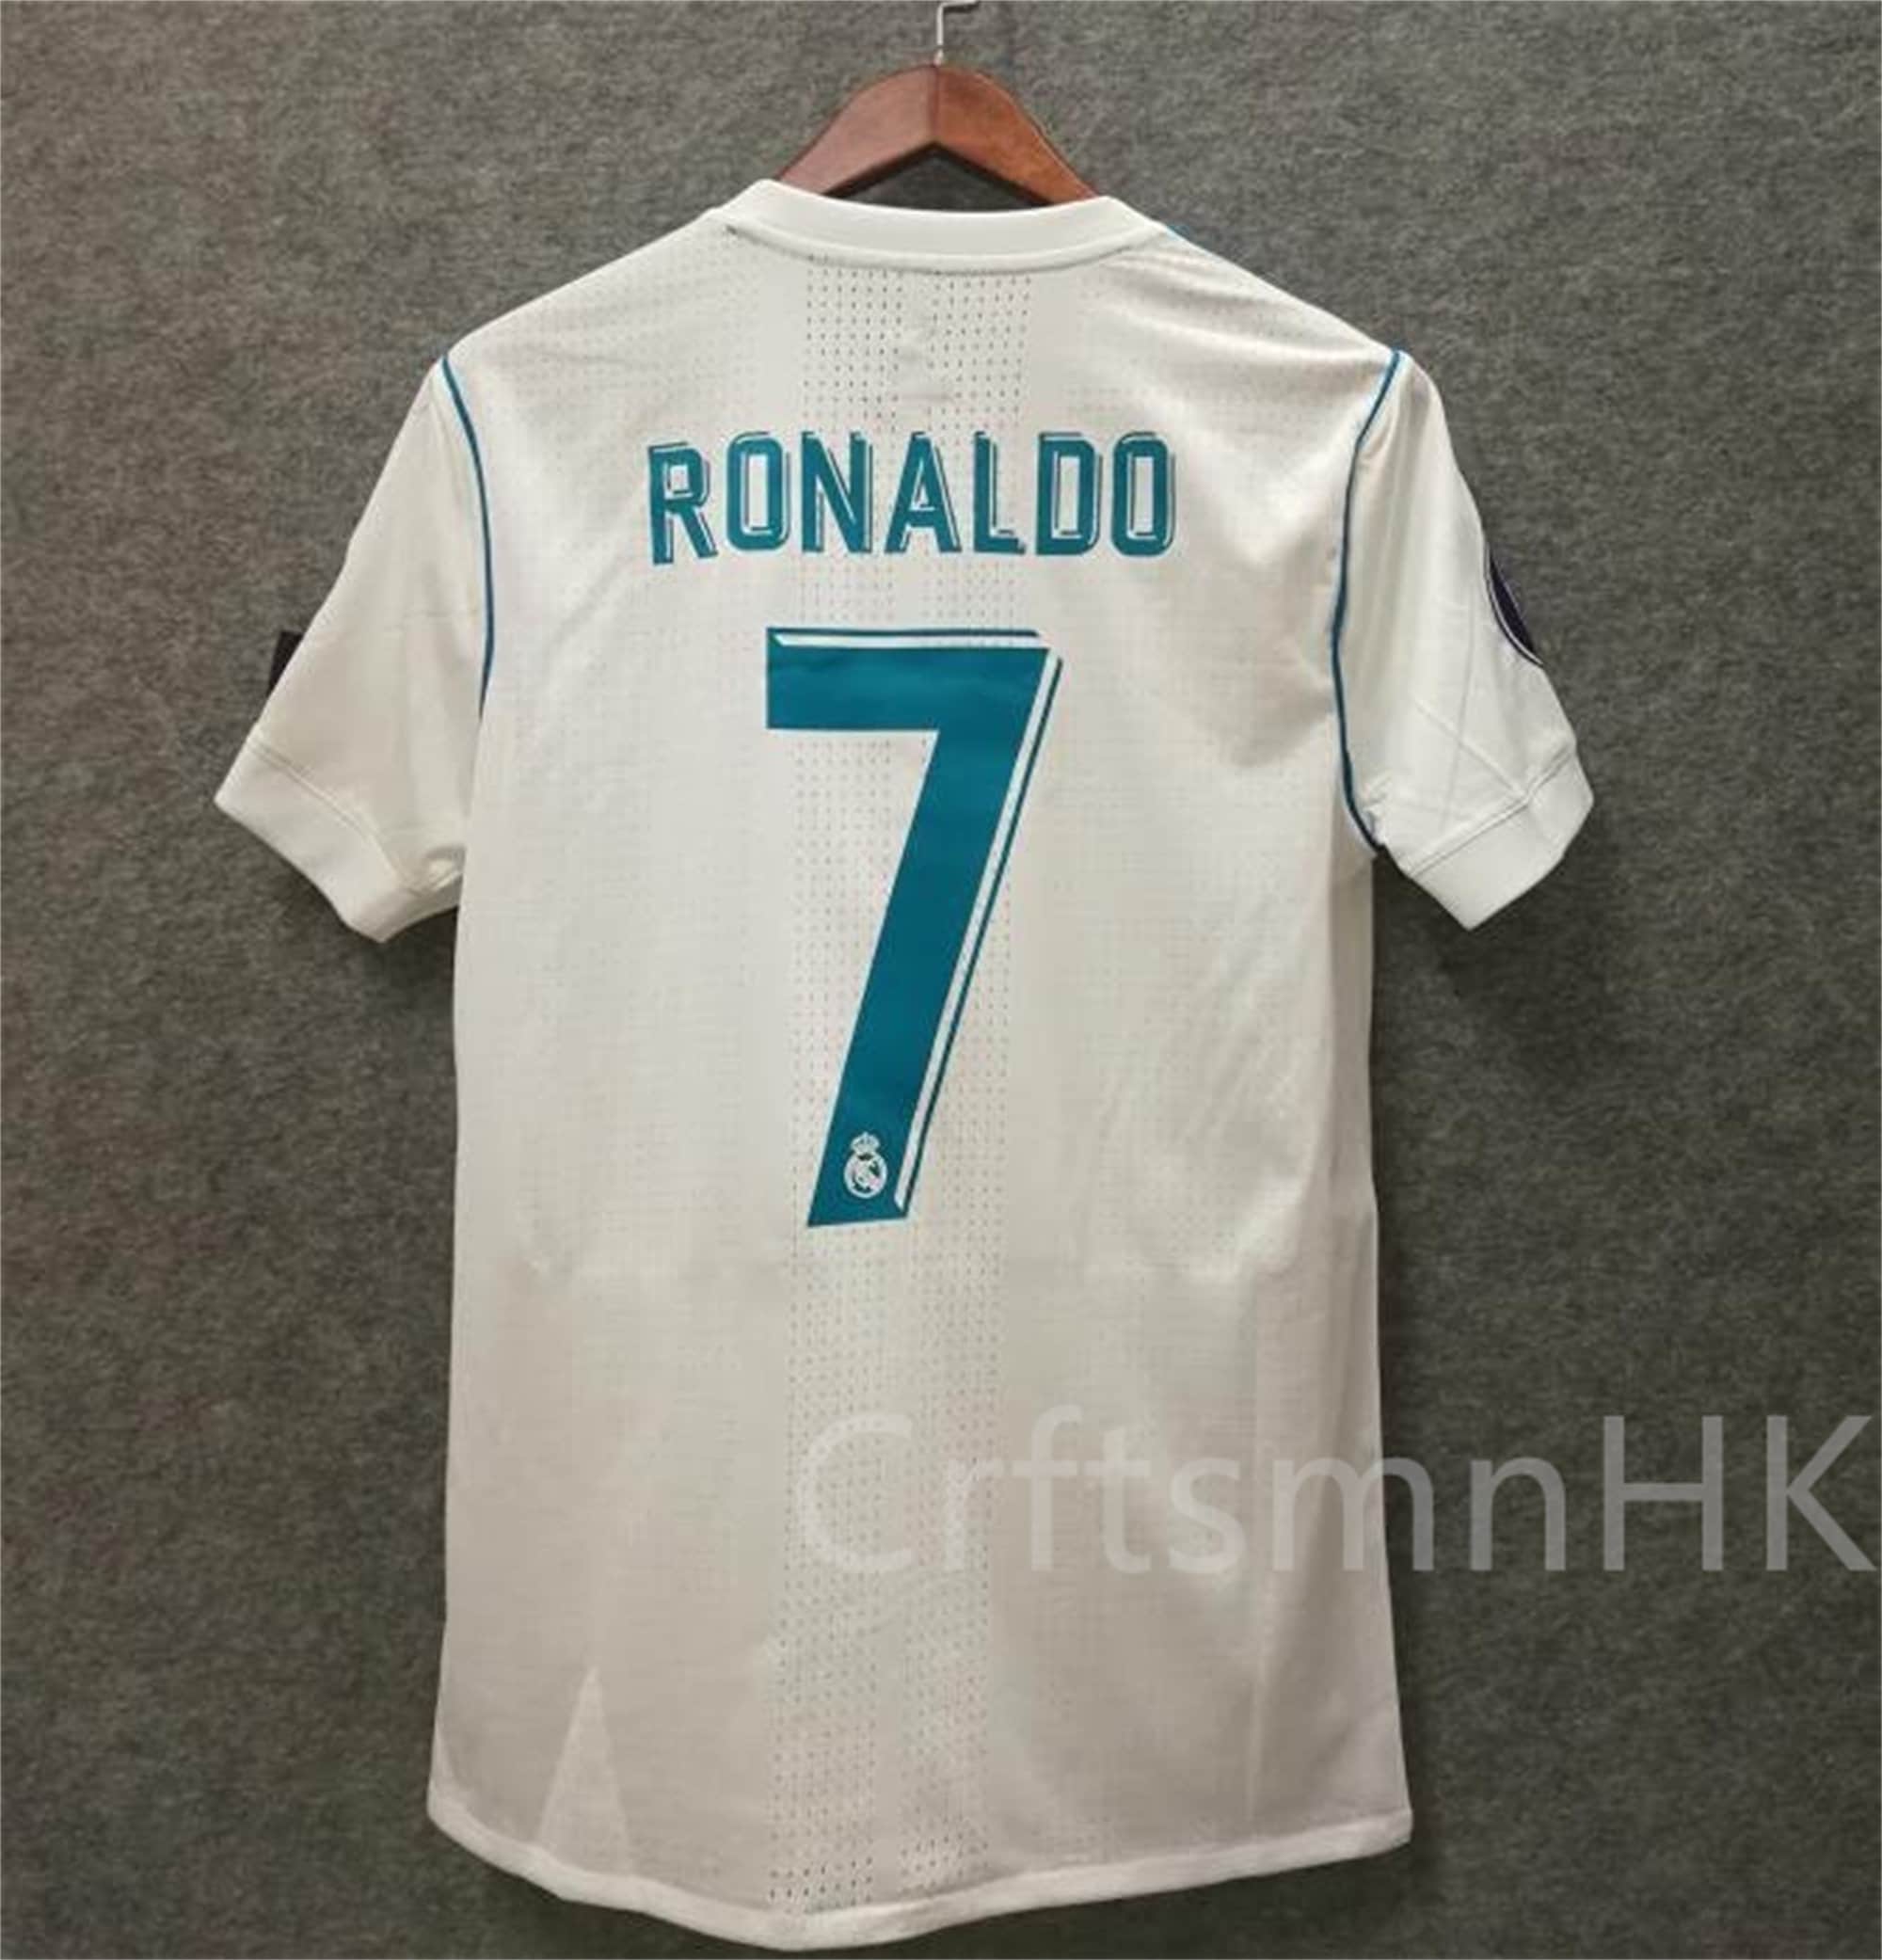 Ronaldo real madrid jersey 2017